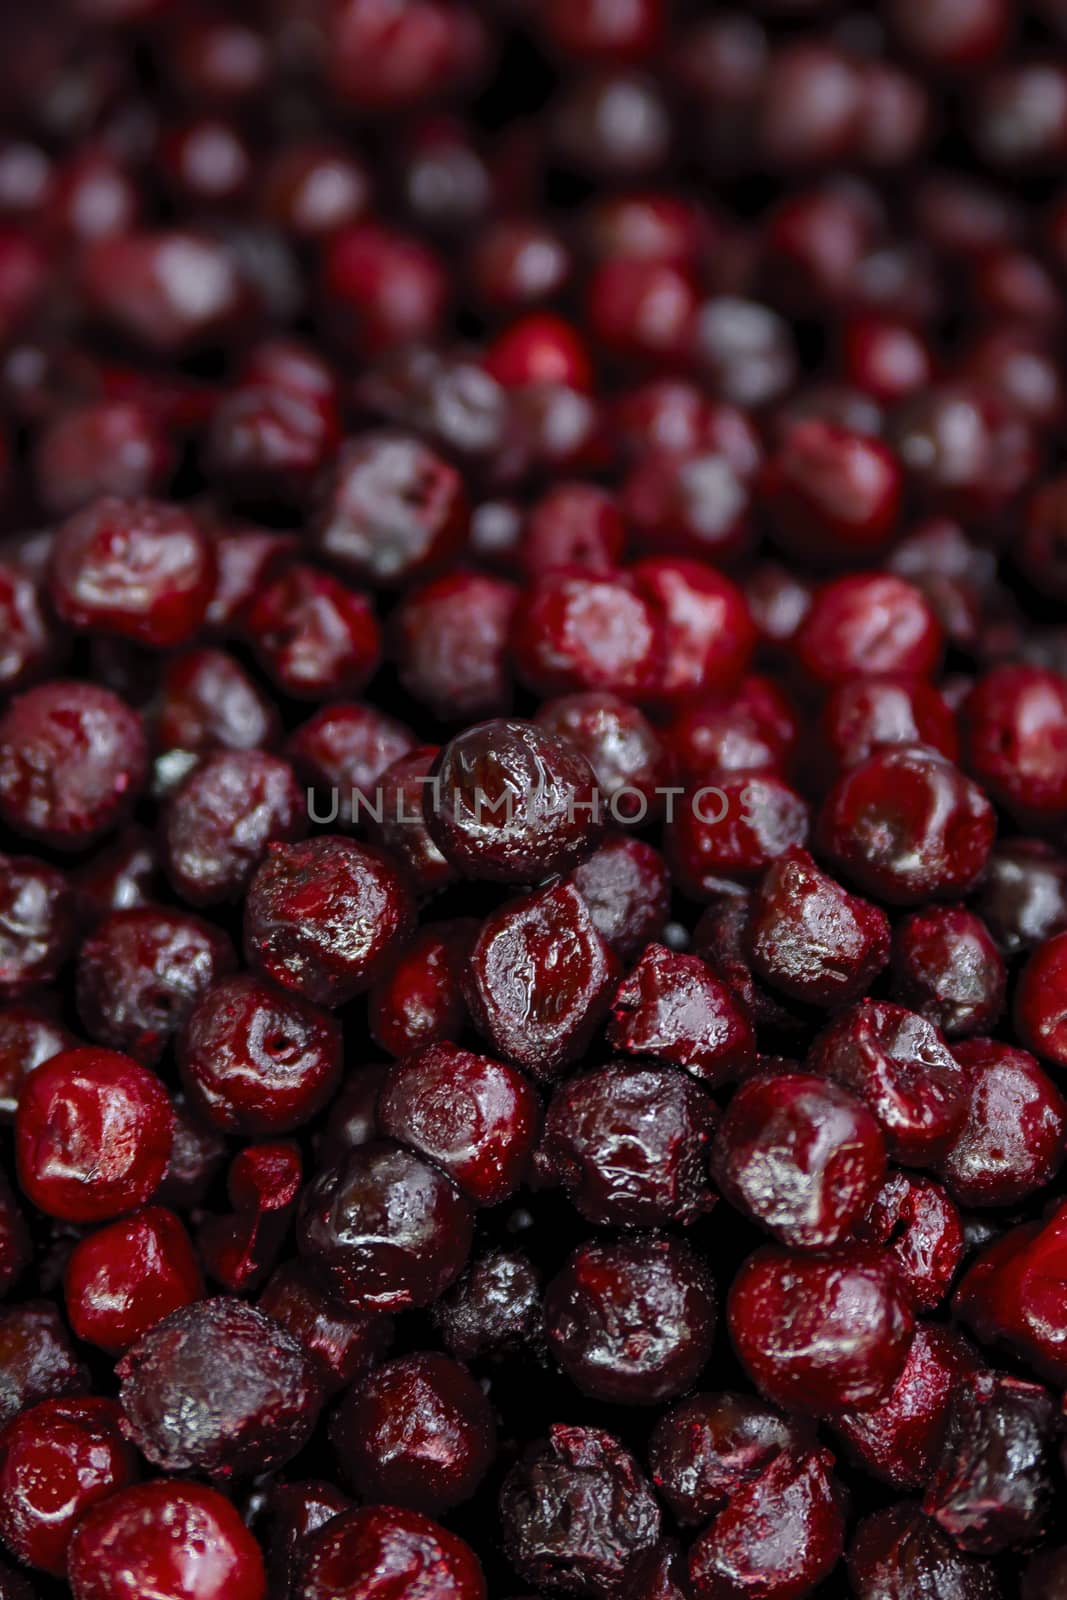 Frozen berries in grocery store shot close-up, blurred background. Dark red cherries